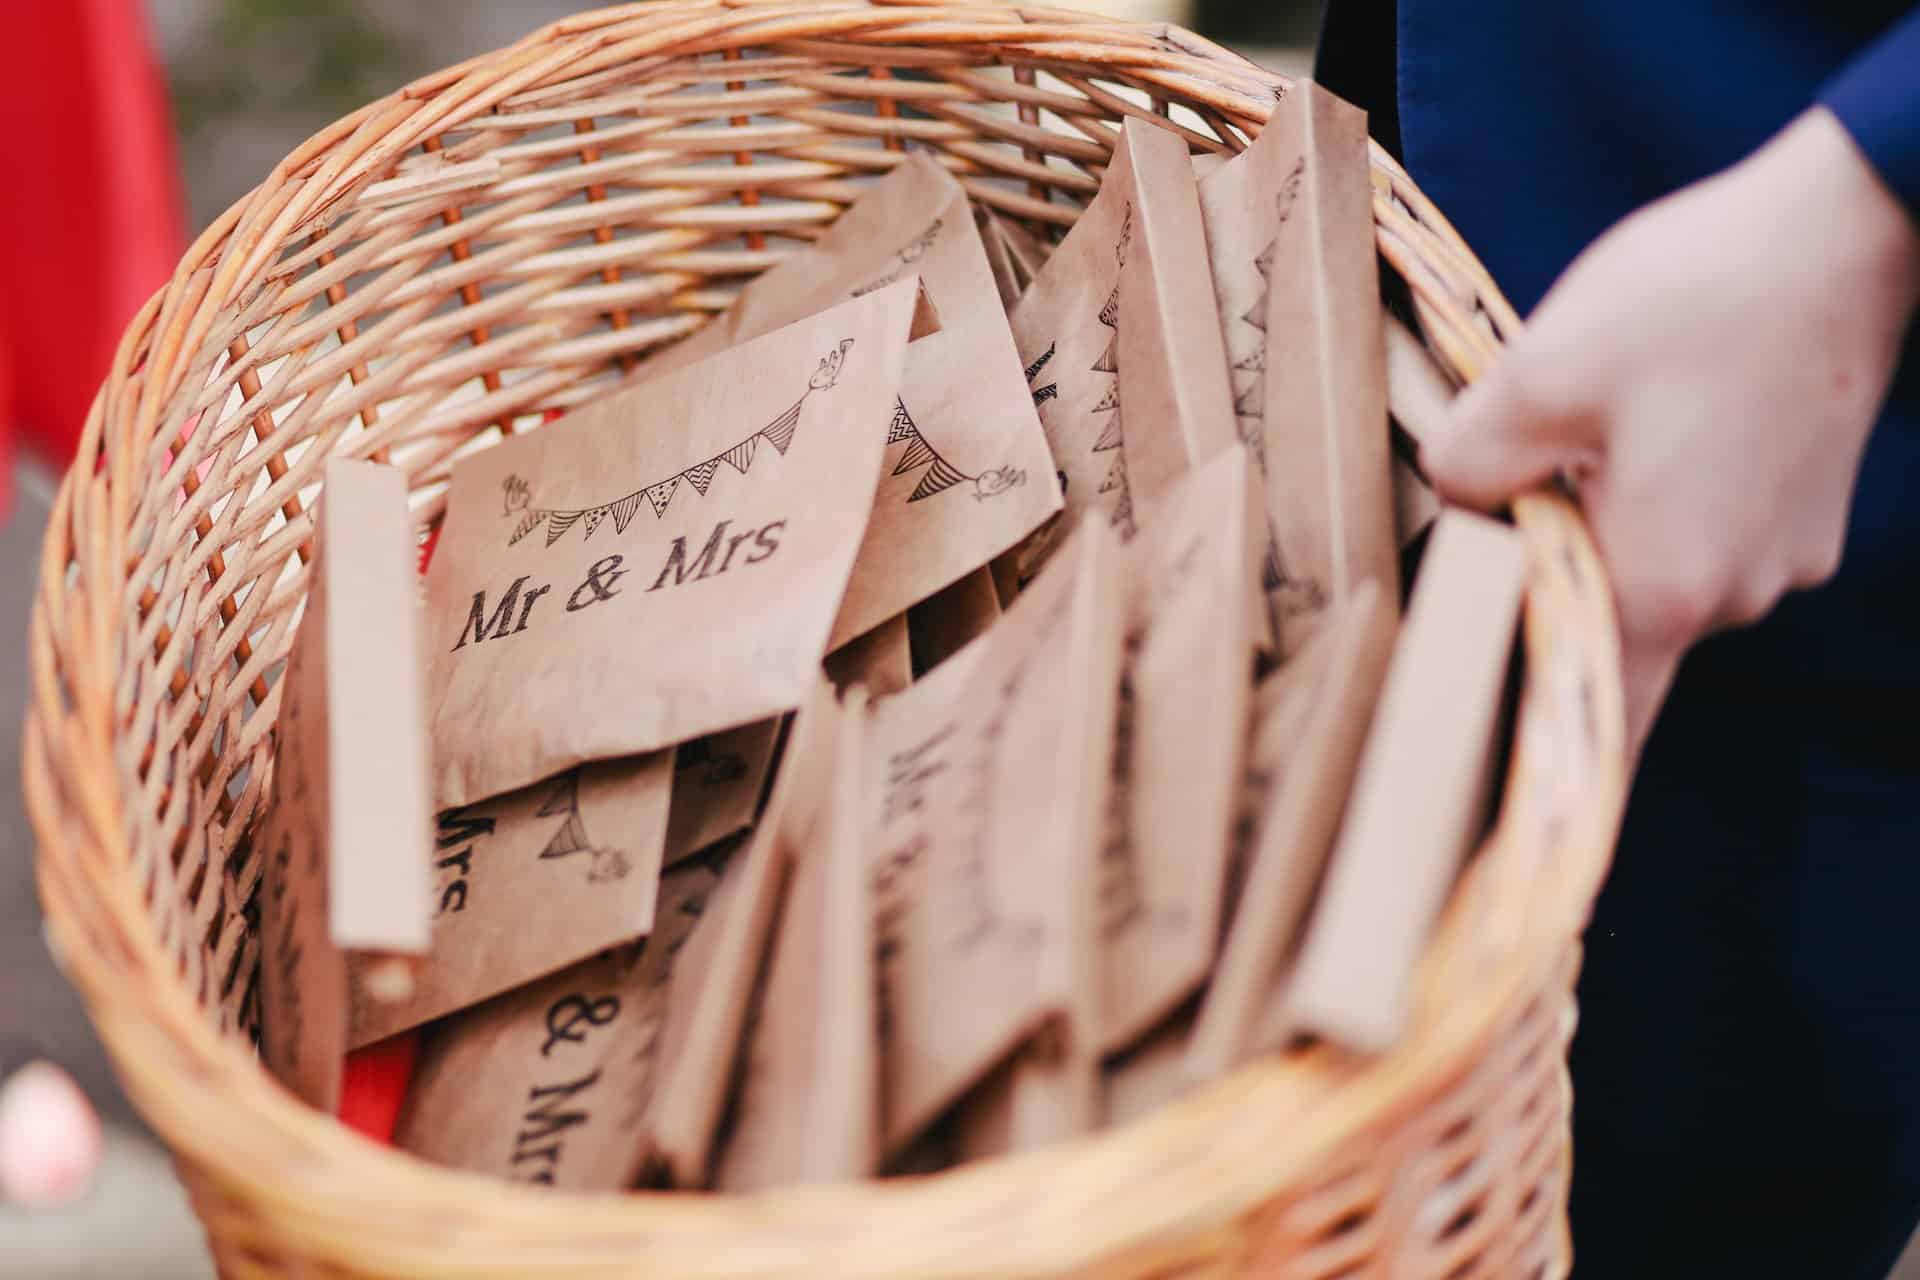 Wedding cards in a basket